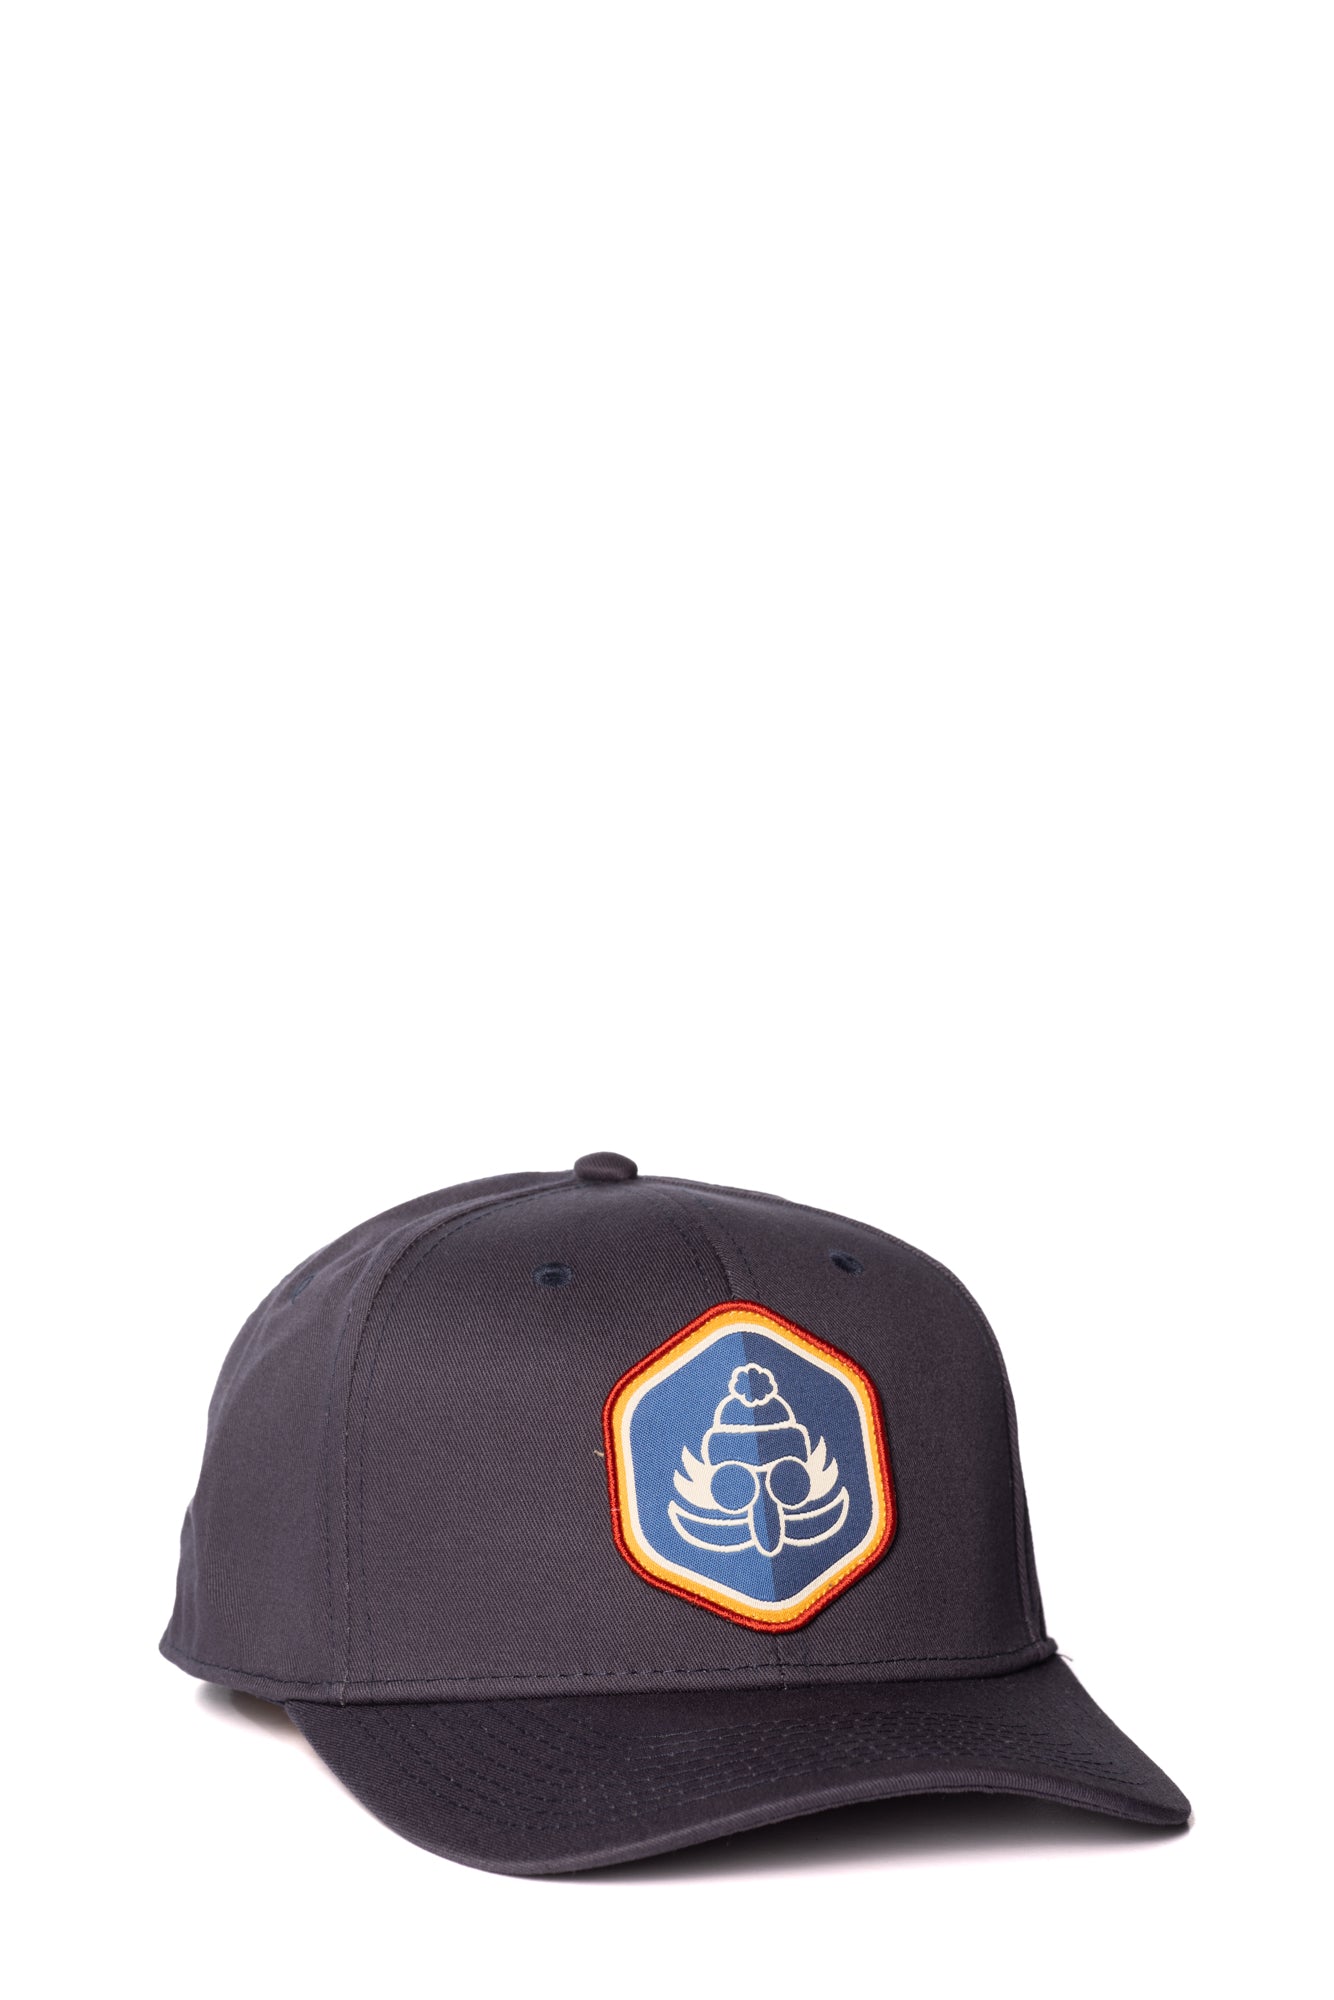 Doc Ponds Navy Blue Patch Hat